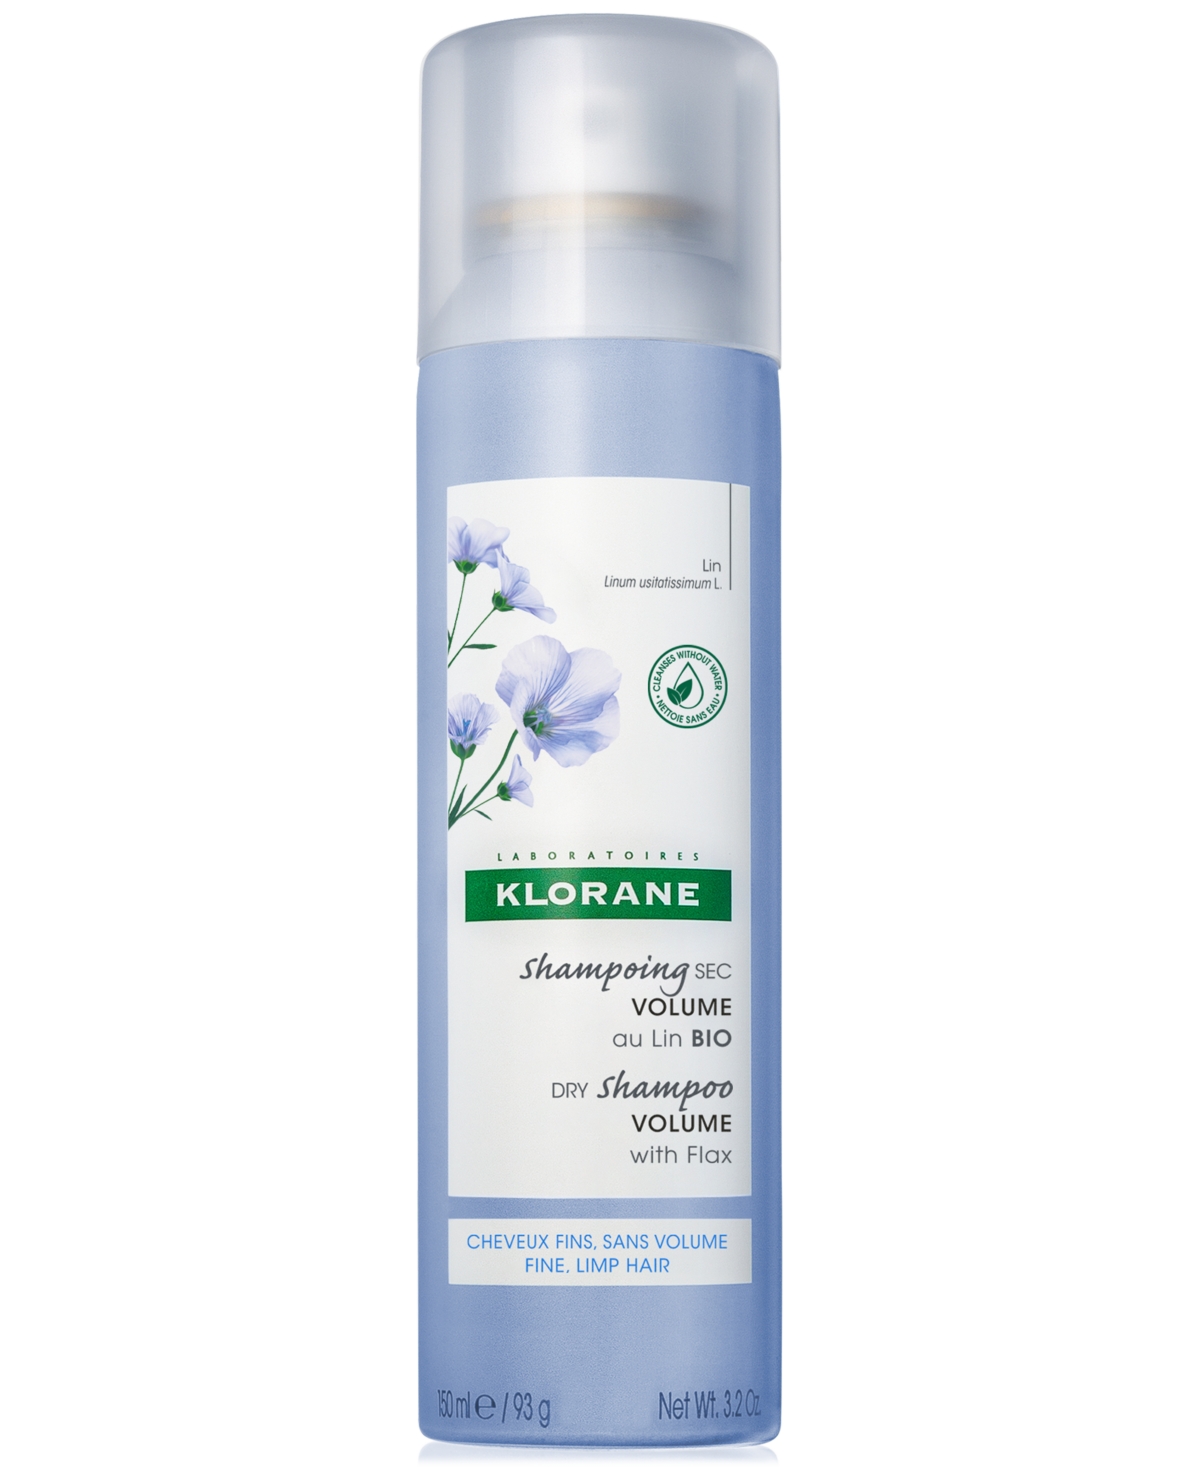 Klorane Volumizing Dry Shampoo With Flax, 3.2 oz.